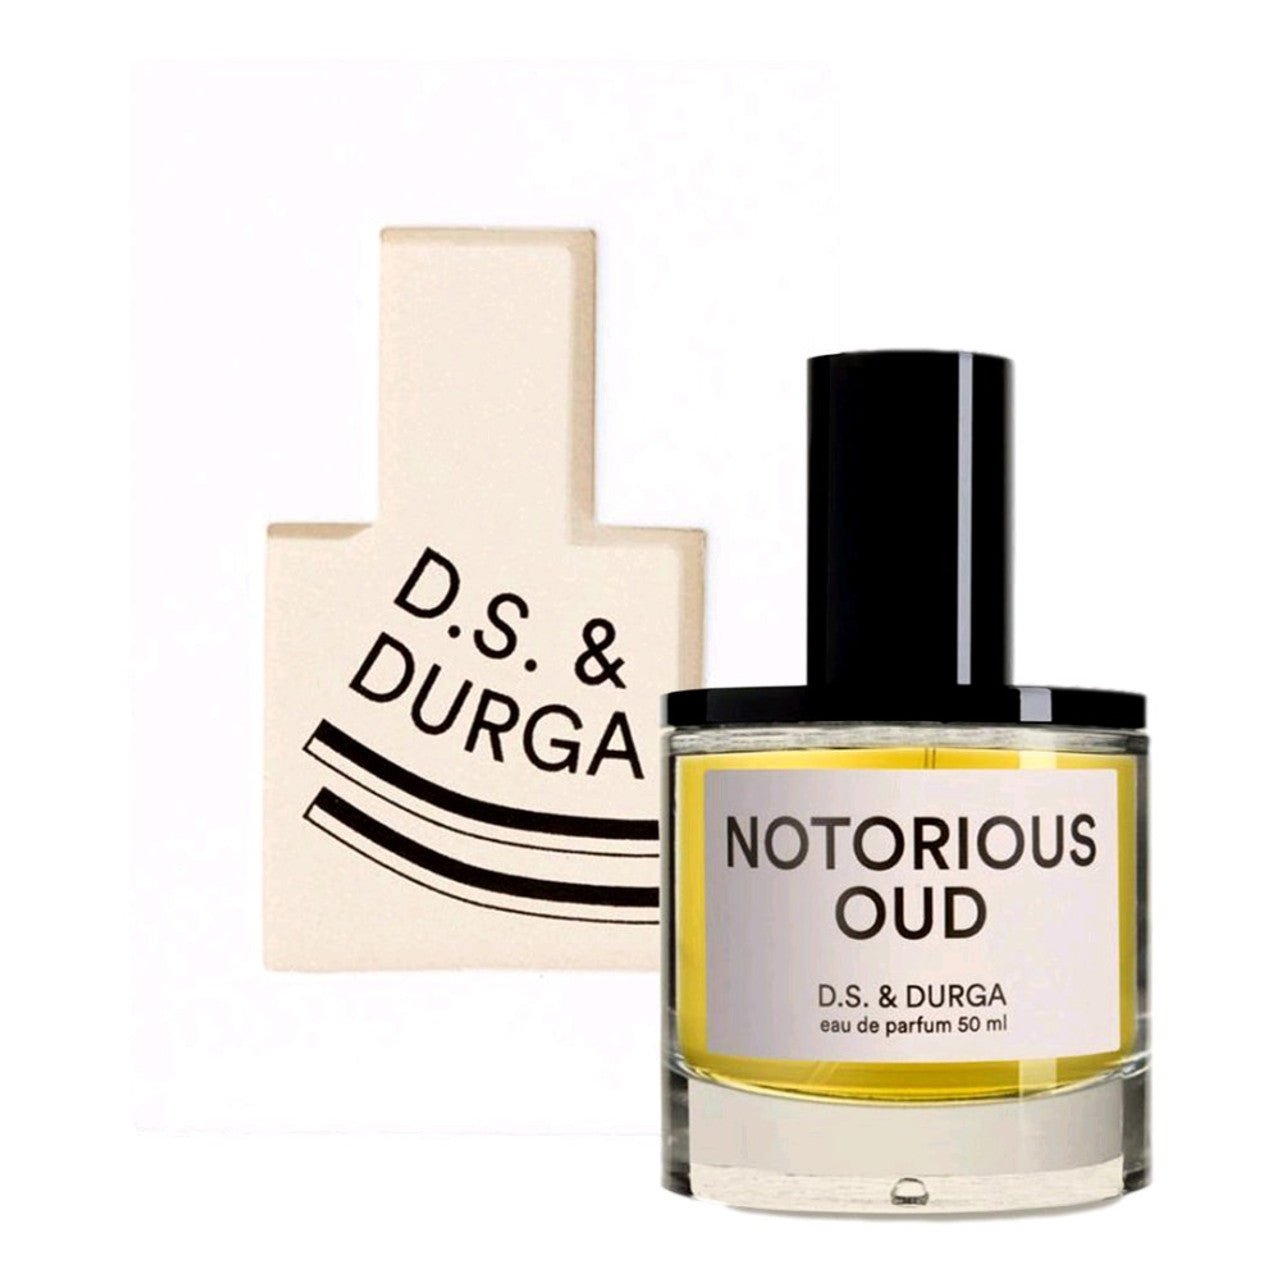 D.S.& Durga Notorious Oud EDP | My Perfume Shop Australia